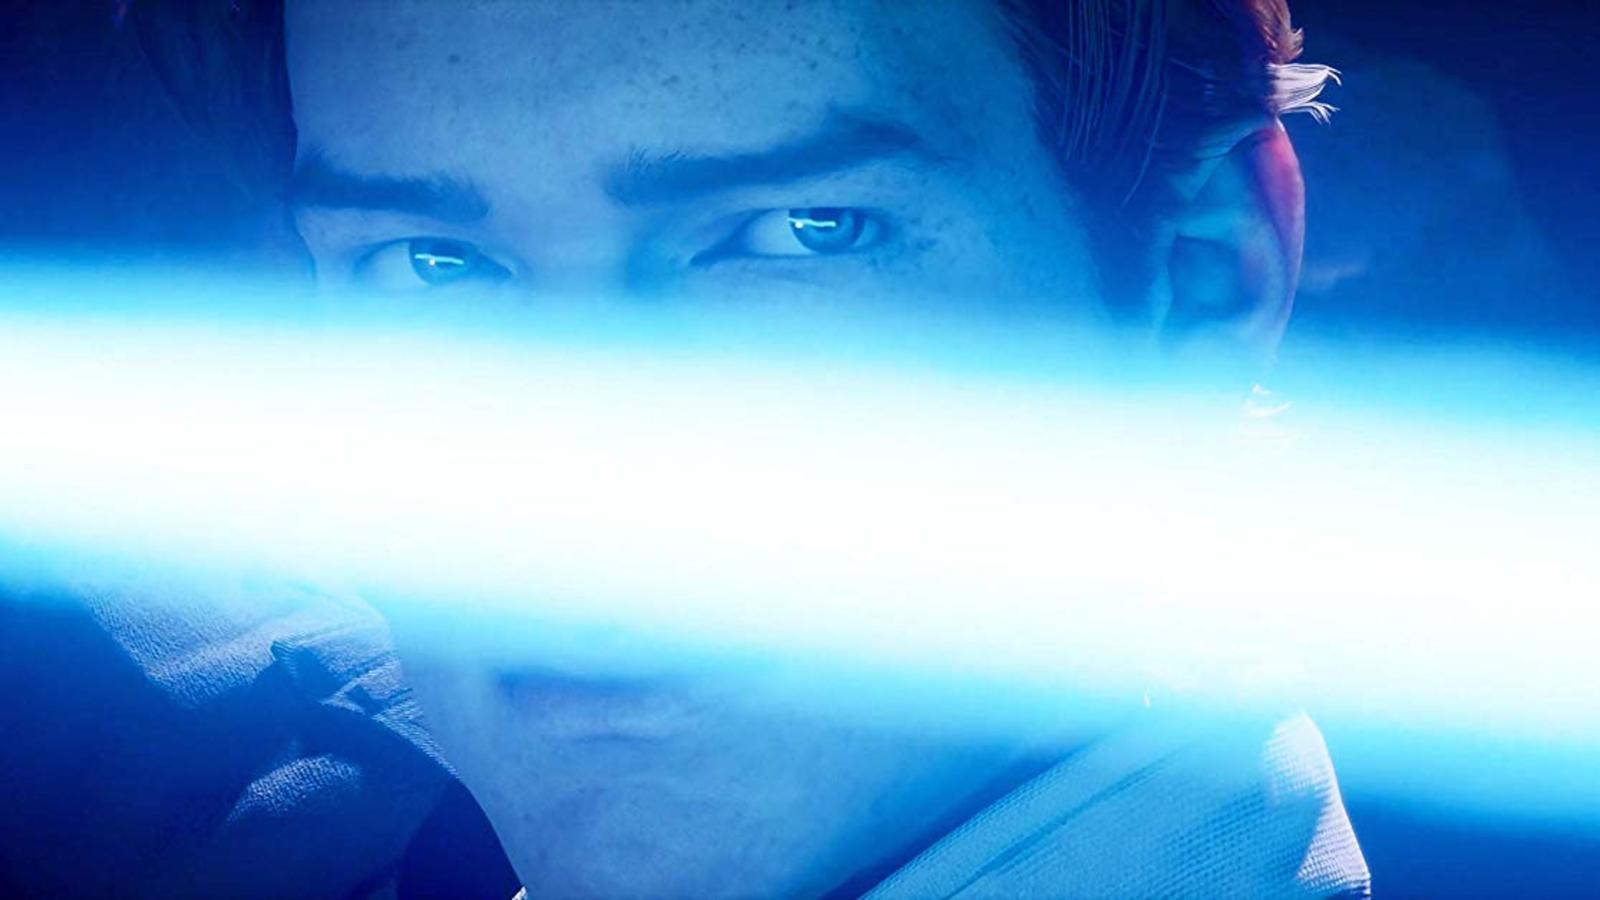 Disney teases new Star Wars game reveal